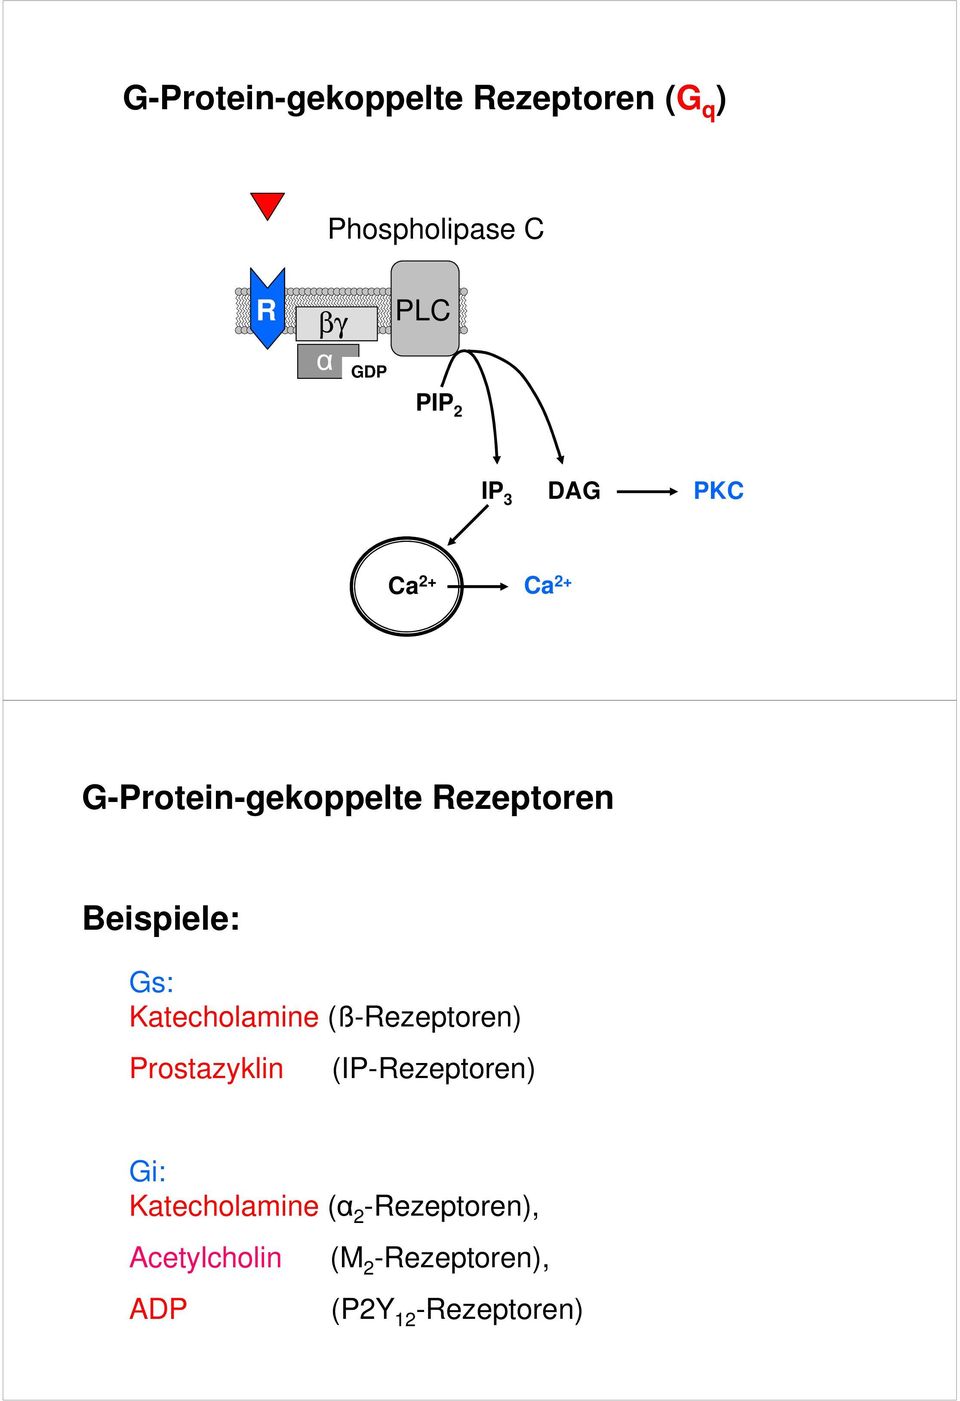 Katecholamine (ß-Rezeptoren) Prostazyklin (IP-Rezeptoren) Gi: